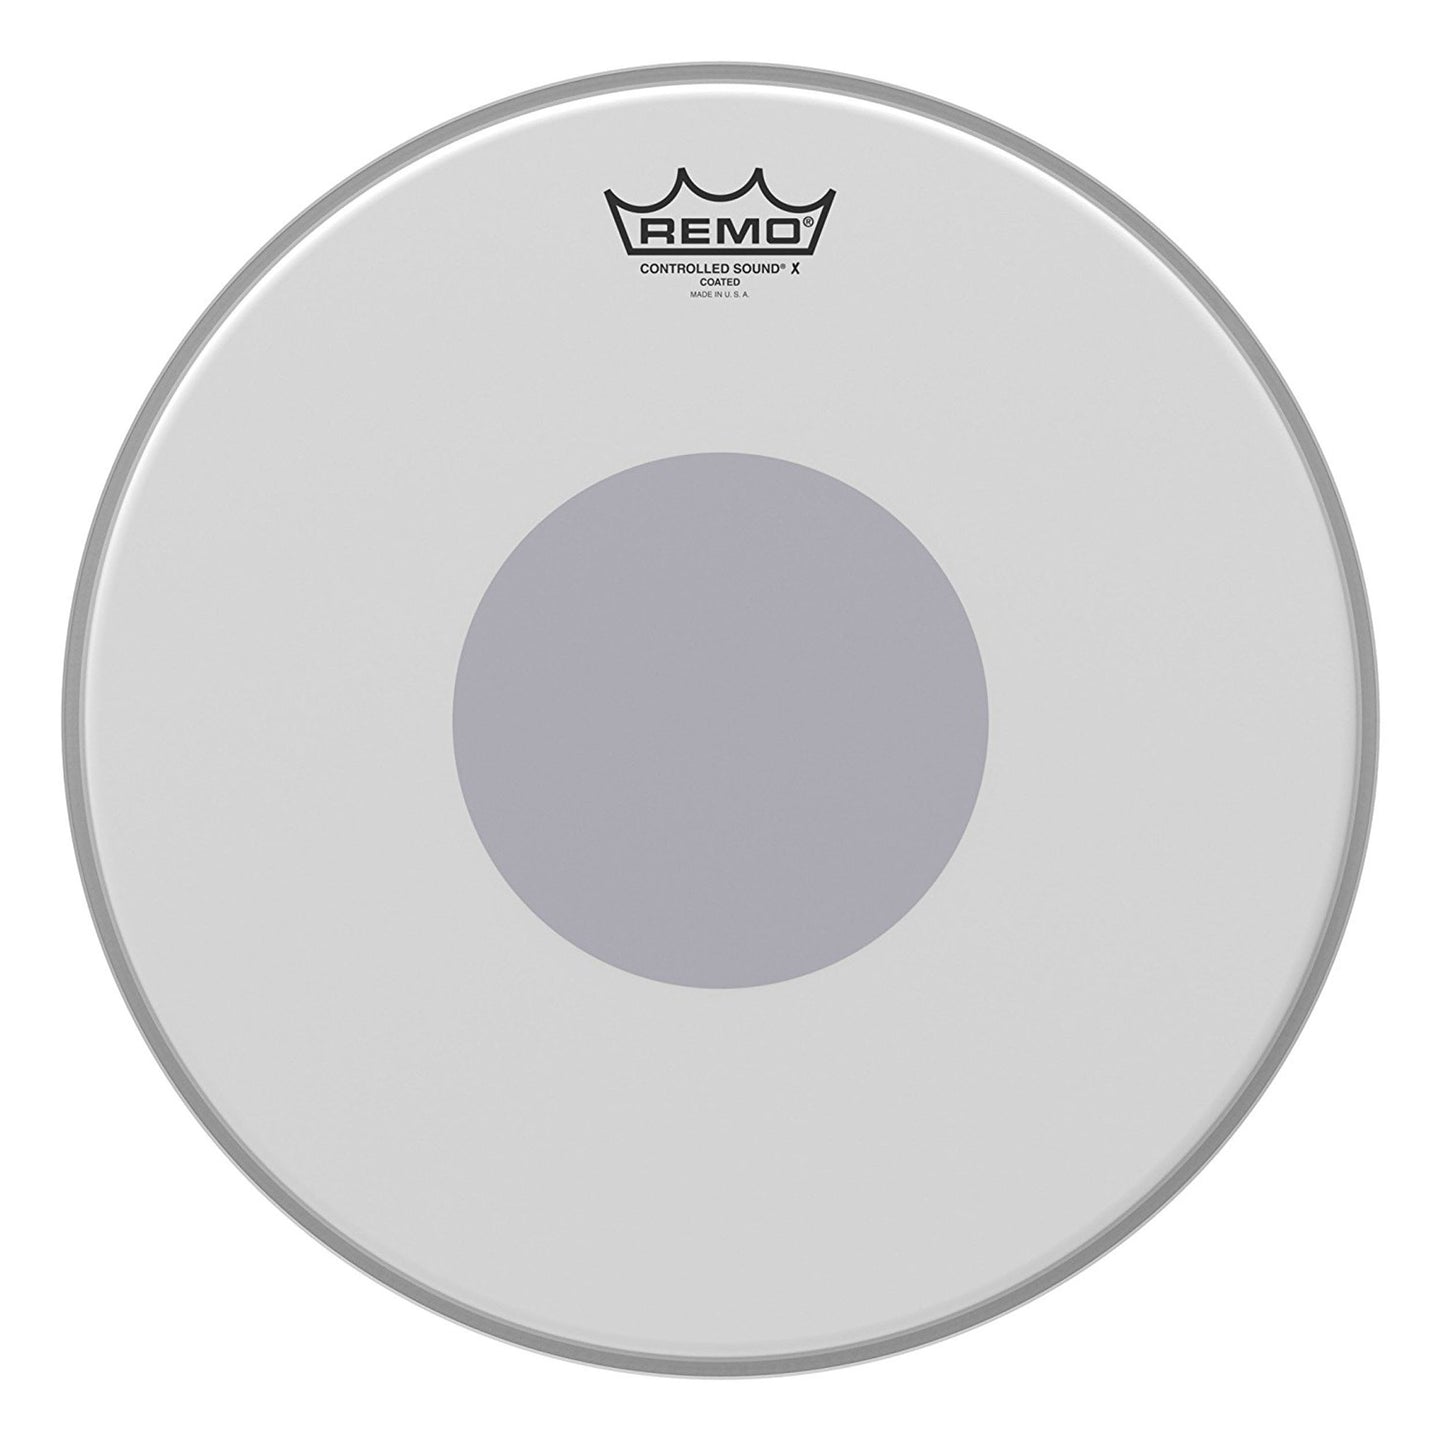 Remo CX011410 Controlled Sound X Drum Head, 14-Inch, Black Dot on Bottom